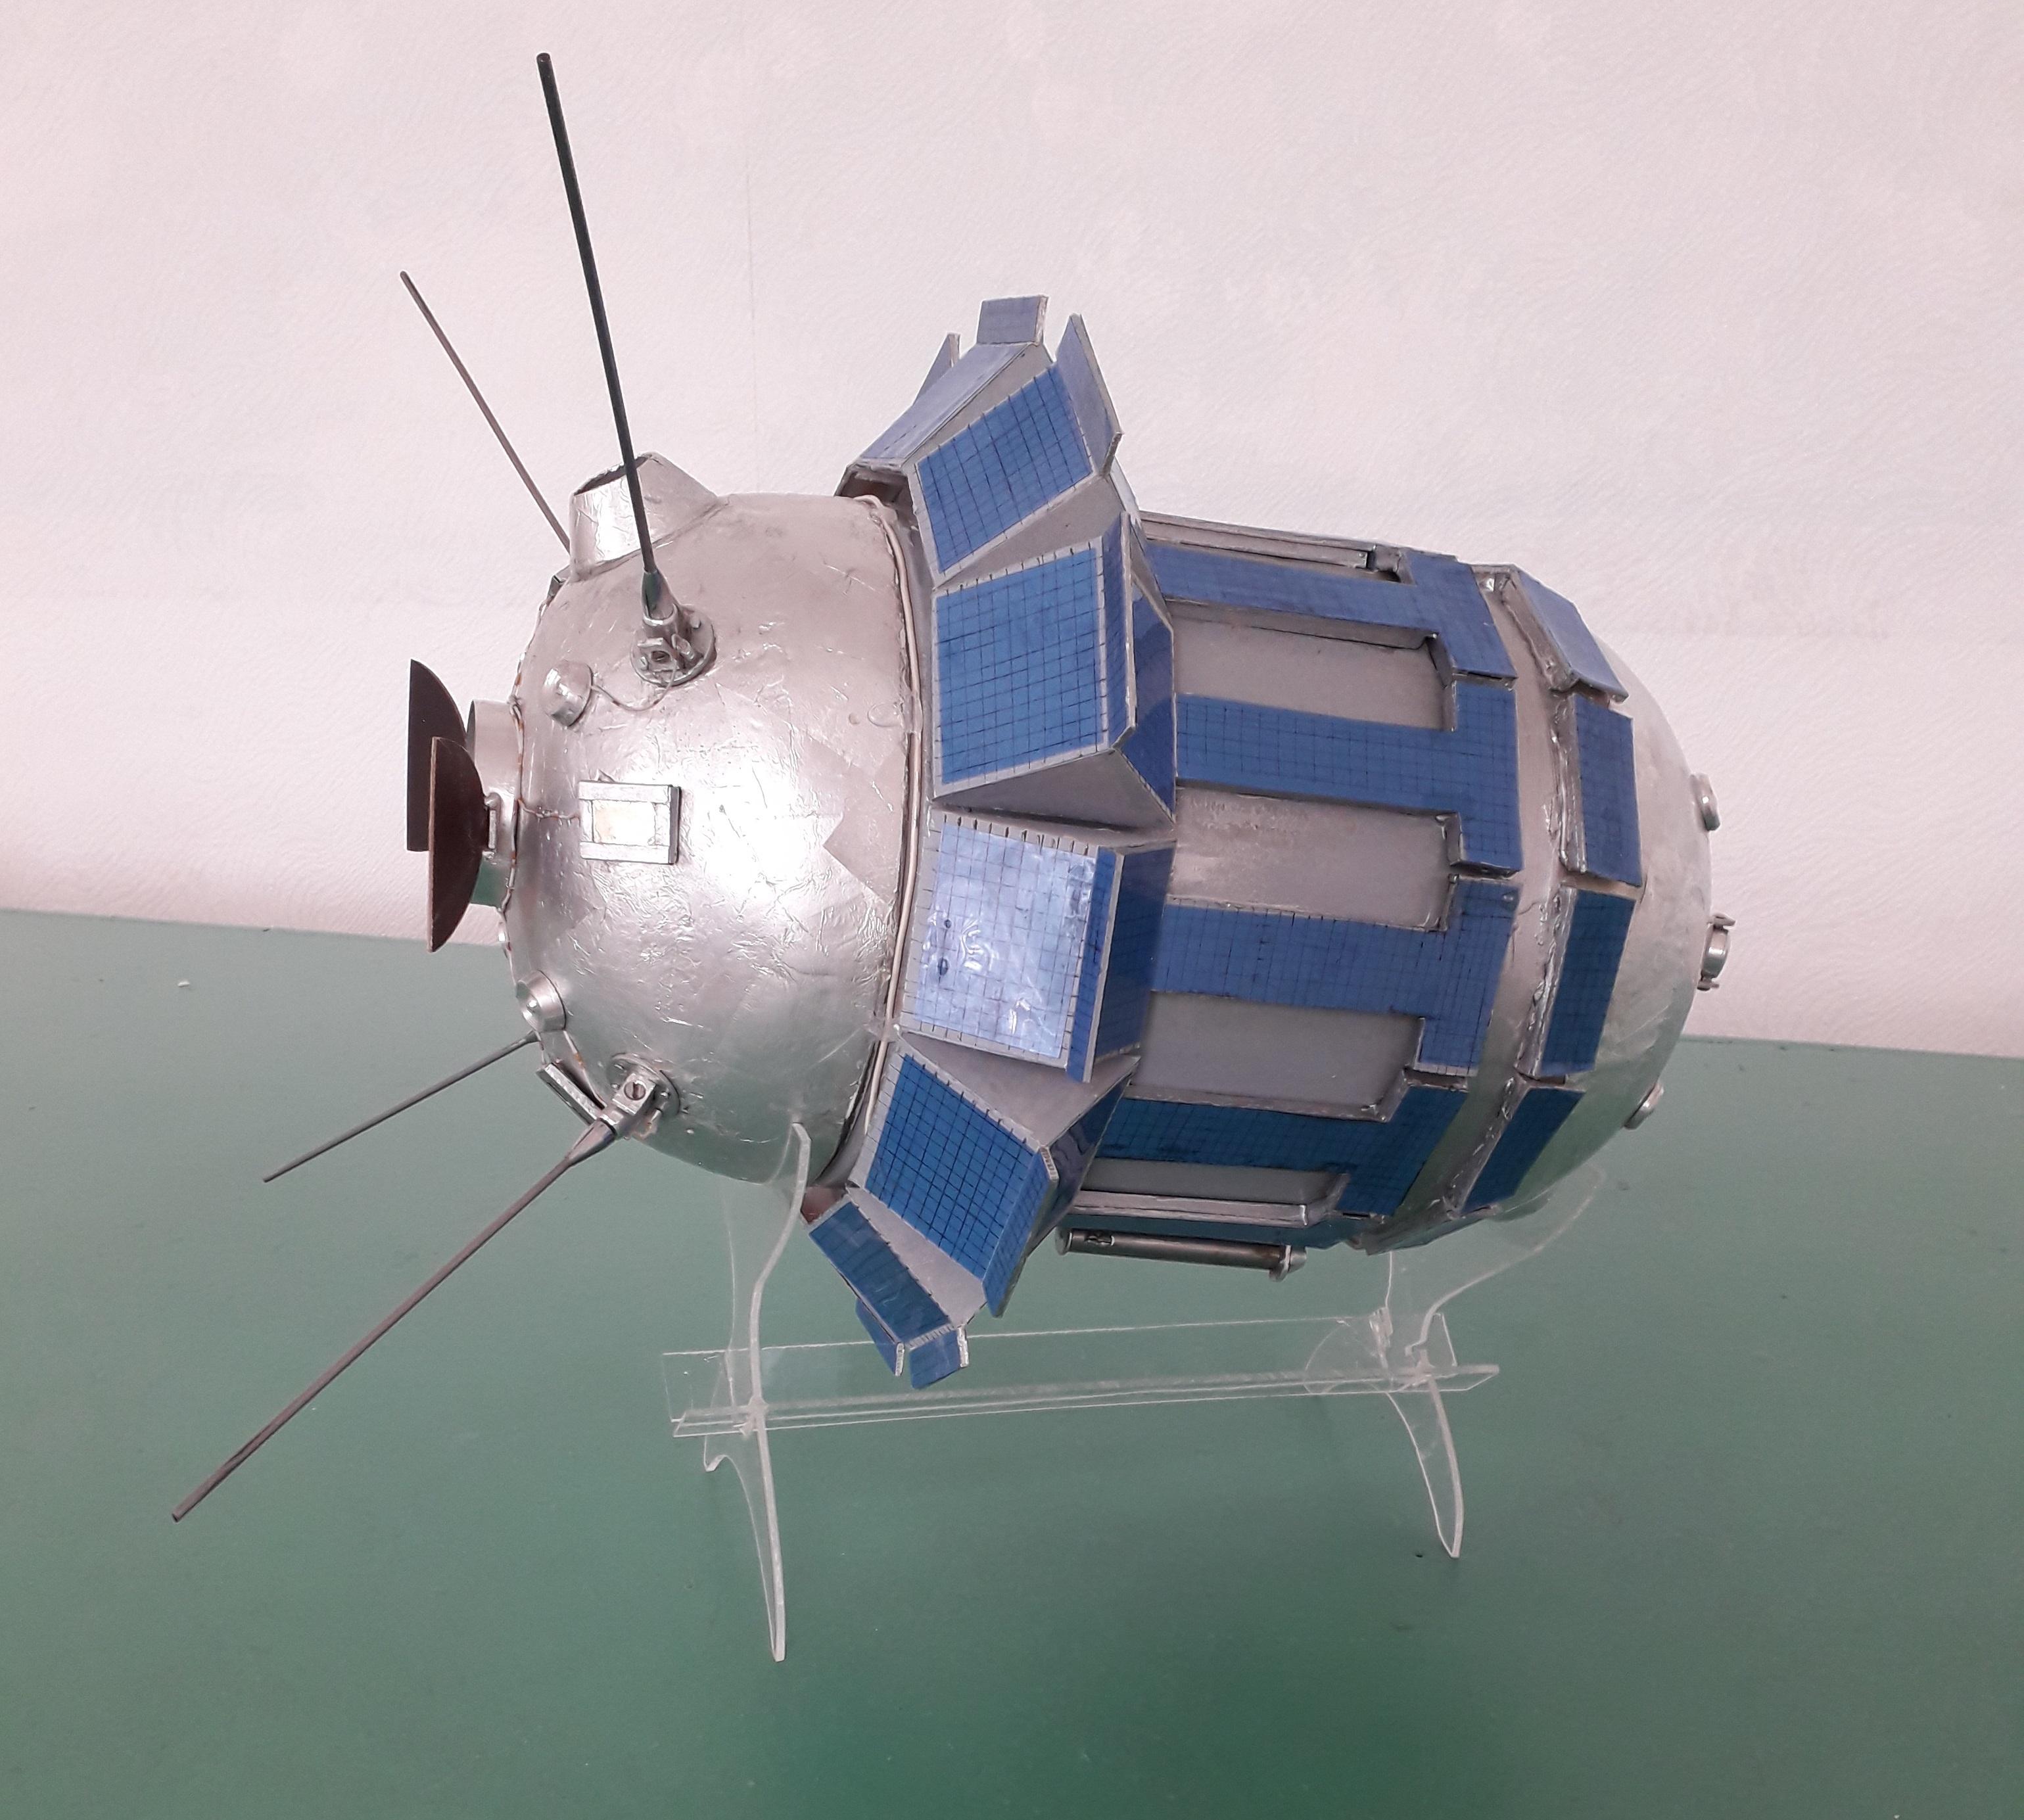 Корабль луна 3. Межпланетная станция Луна 3. 4 Октября 1959 — запущена АМС «Луна-3»,. Луна-3 автоматическая межпланетная. Луна-10 автоматическая межпланетная станция.